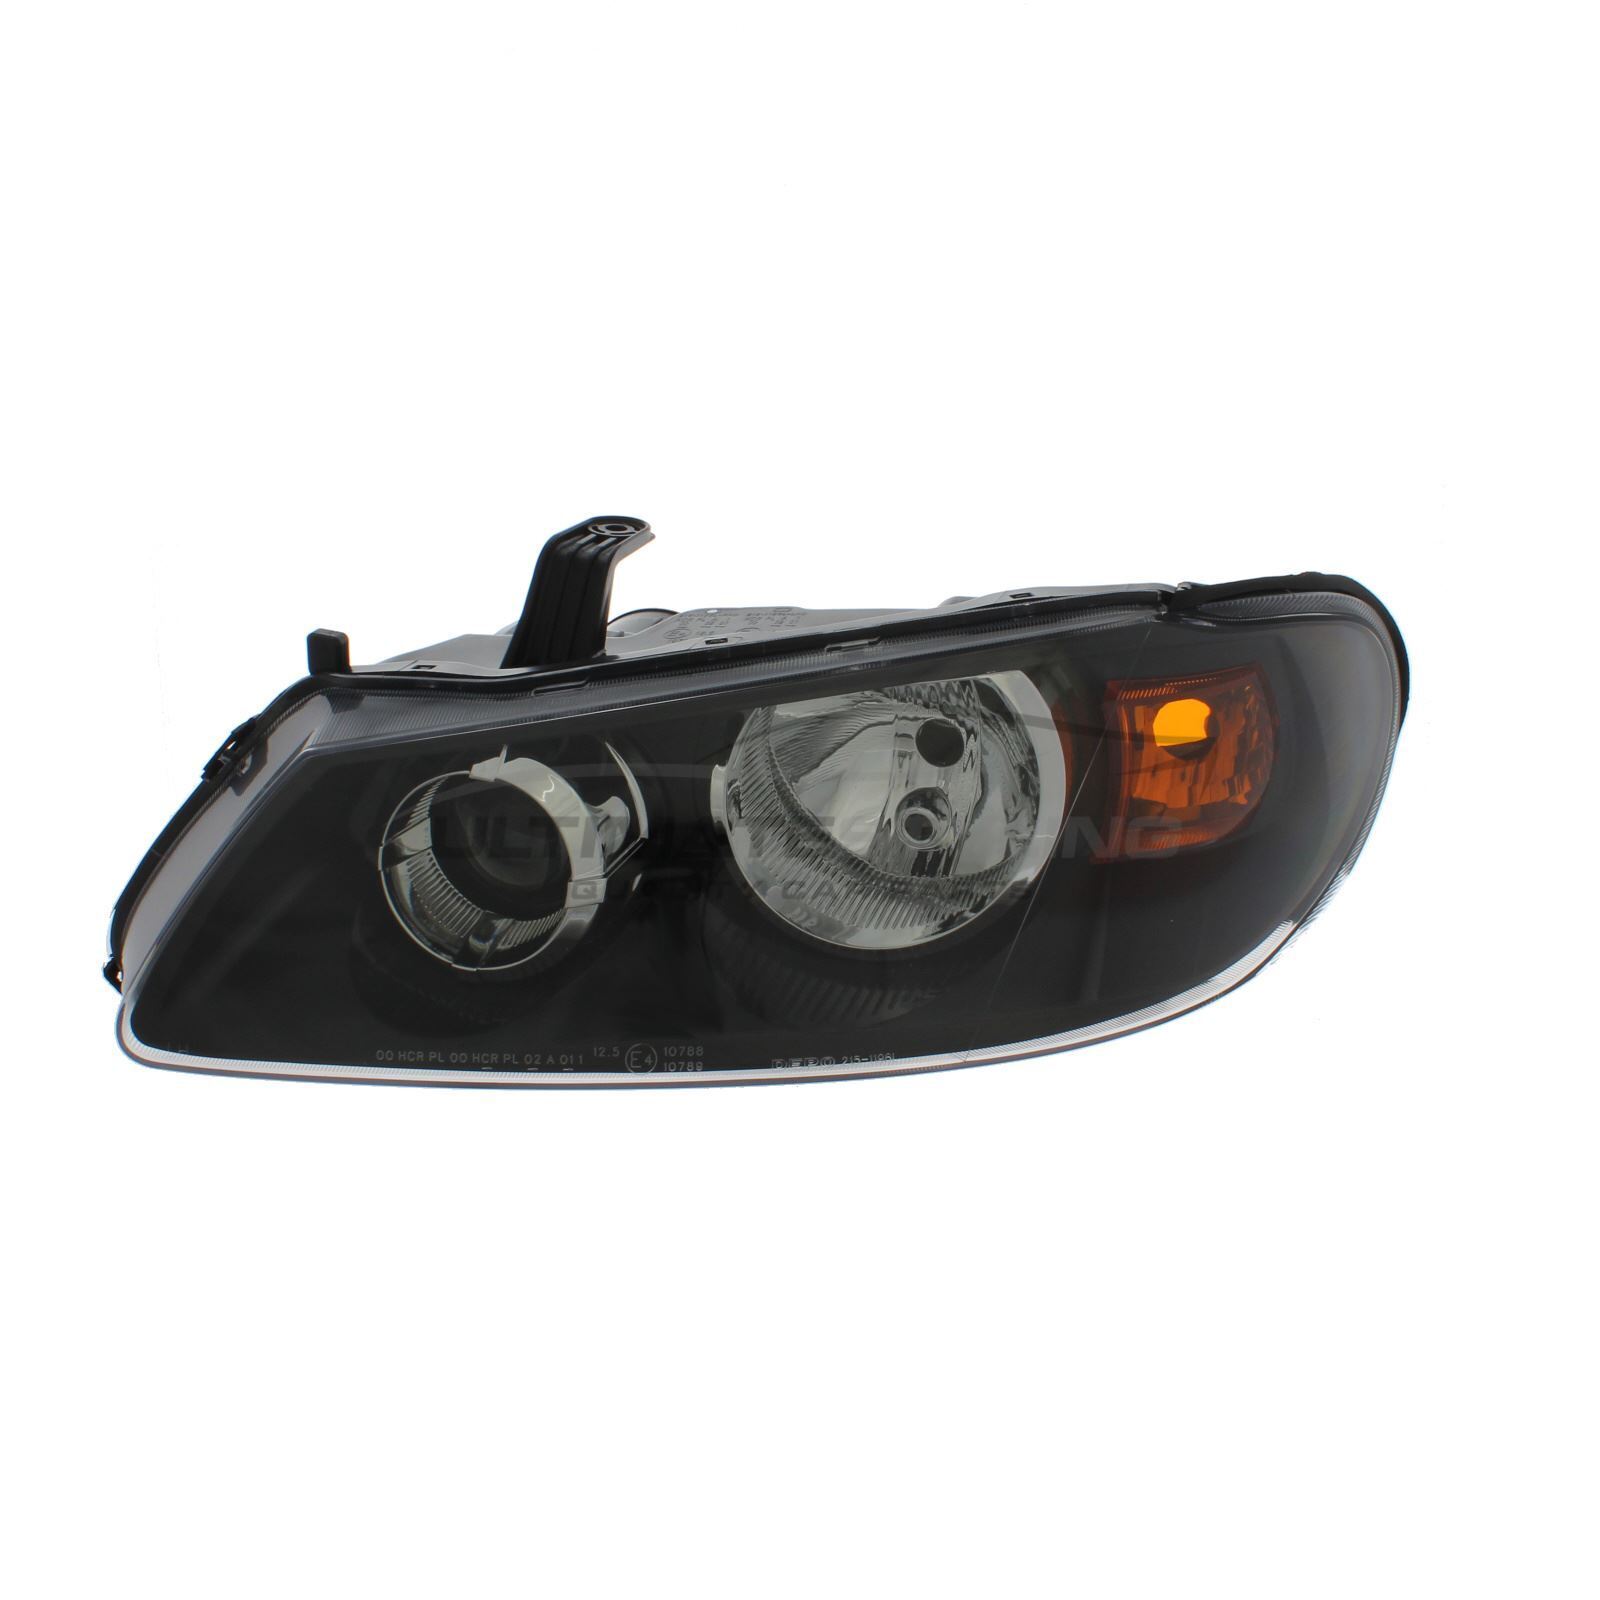 Headlight Fits Nissan Almera N16 2003-2006 Headlamp Black Passenger Side Left